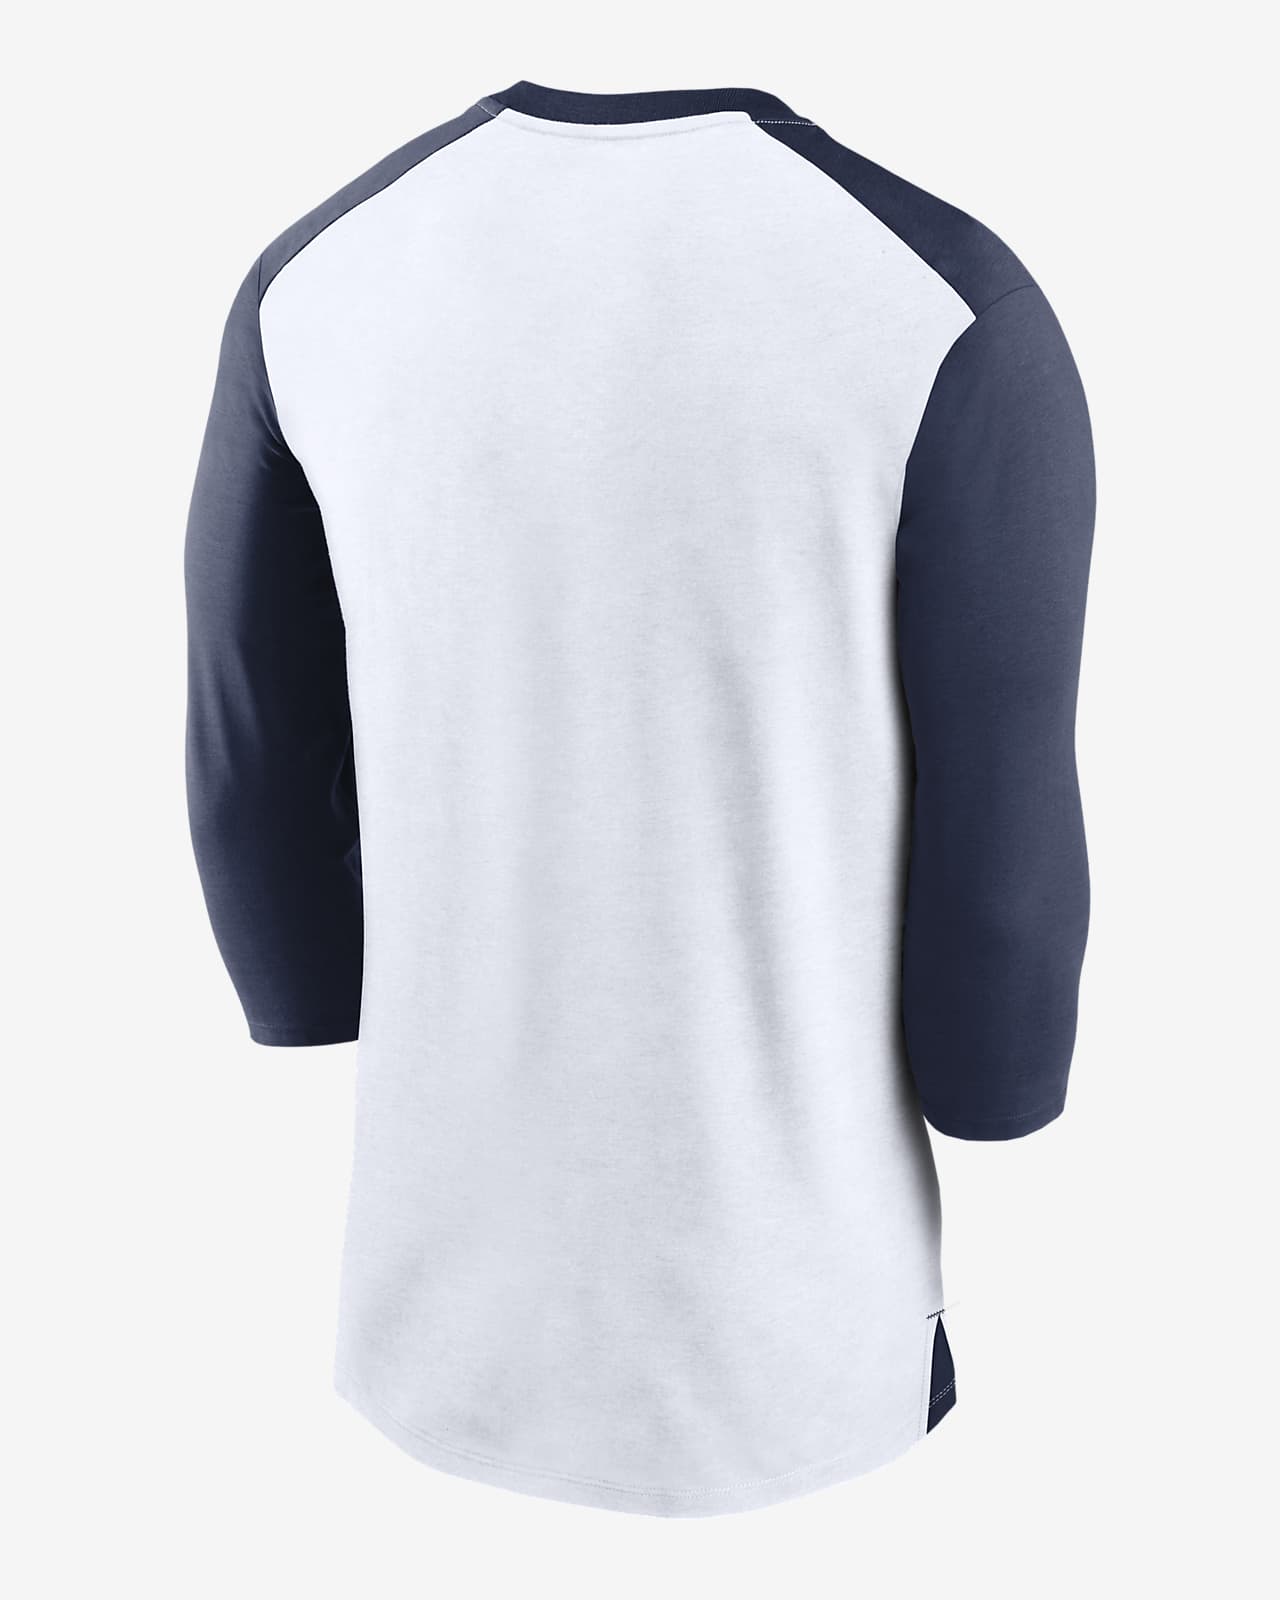 Nike Rewind Colors (MLB New York Yankees) Men's 3/4-Sleeve T-Shirt